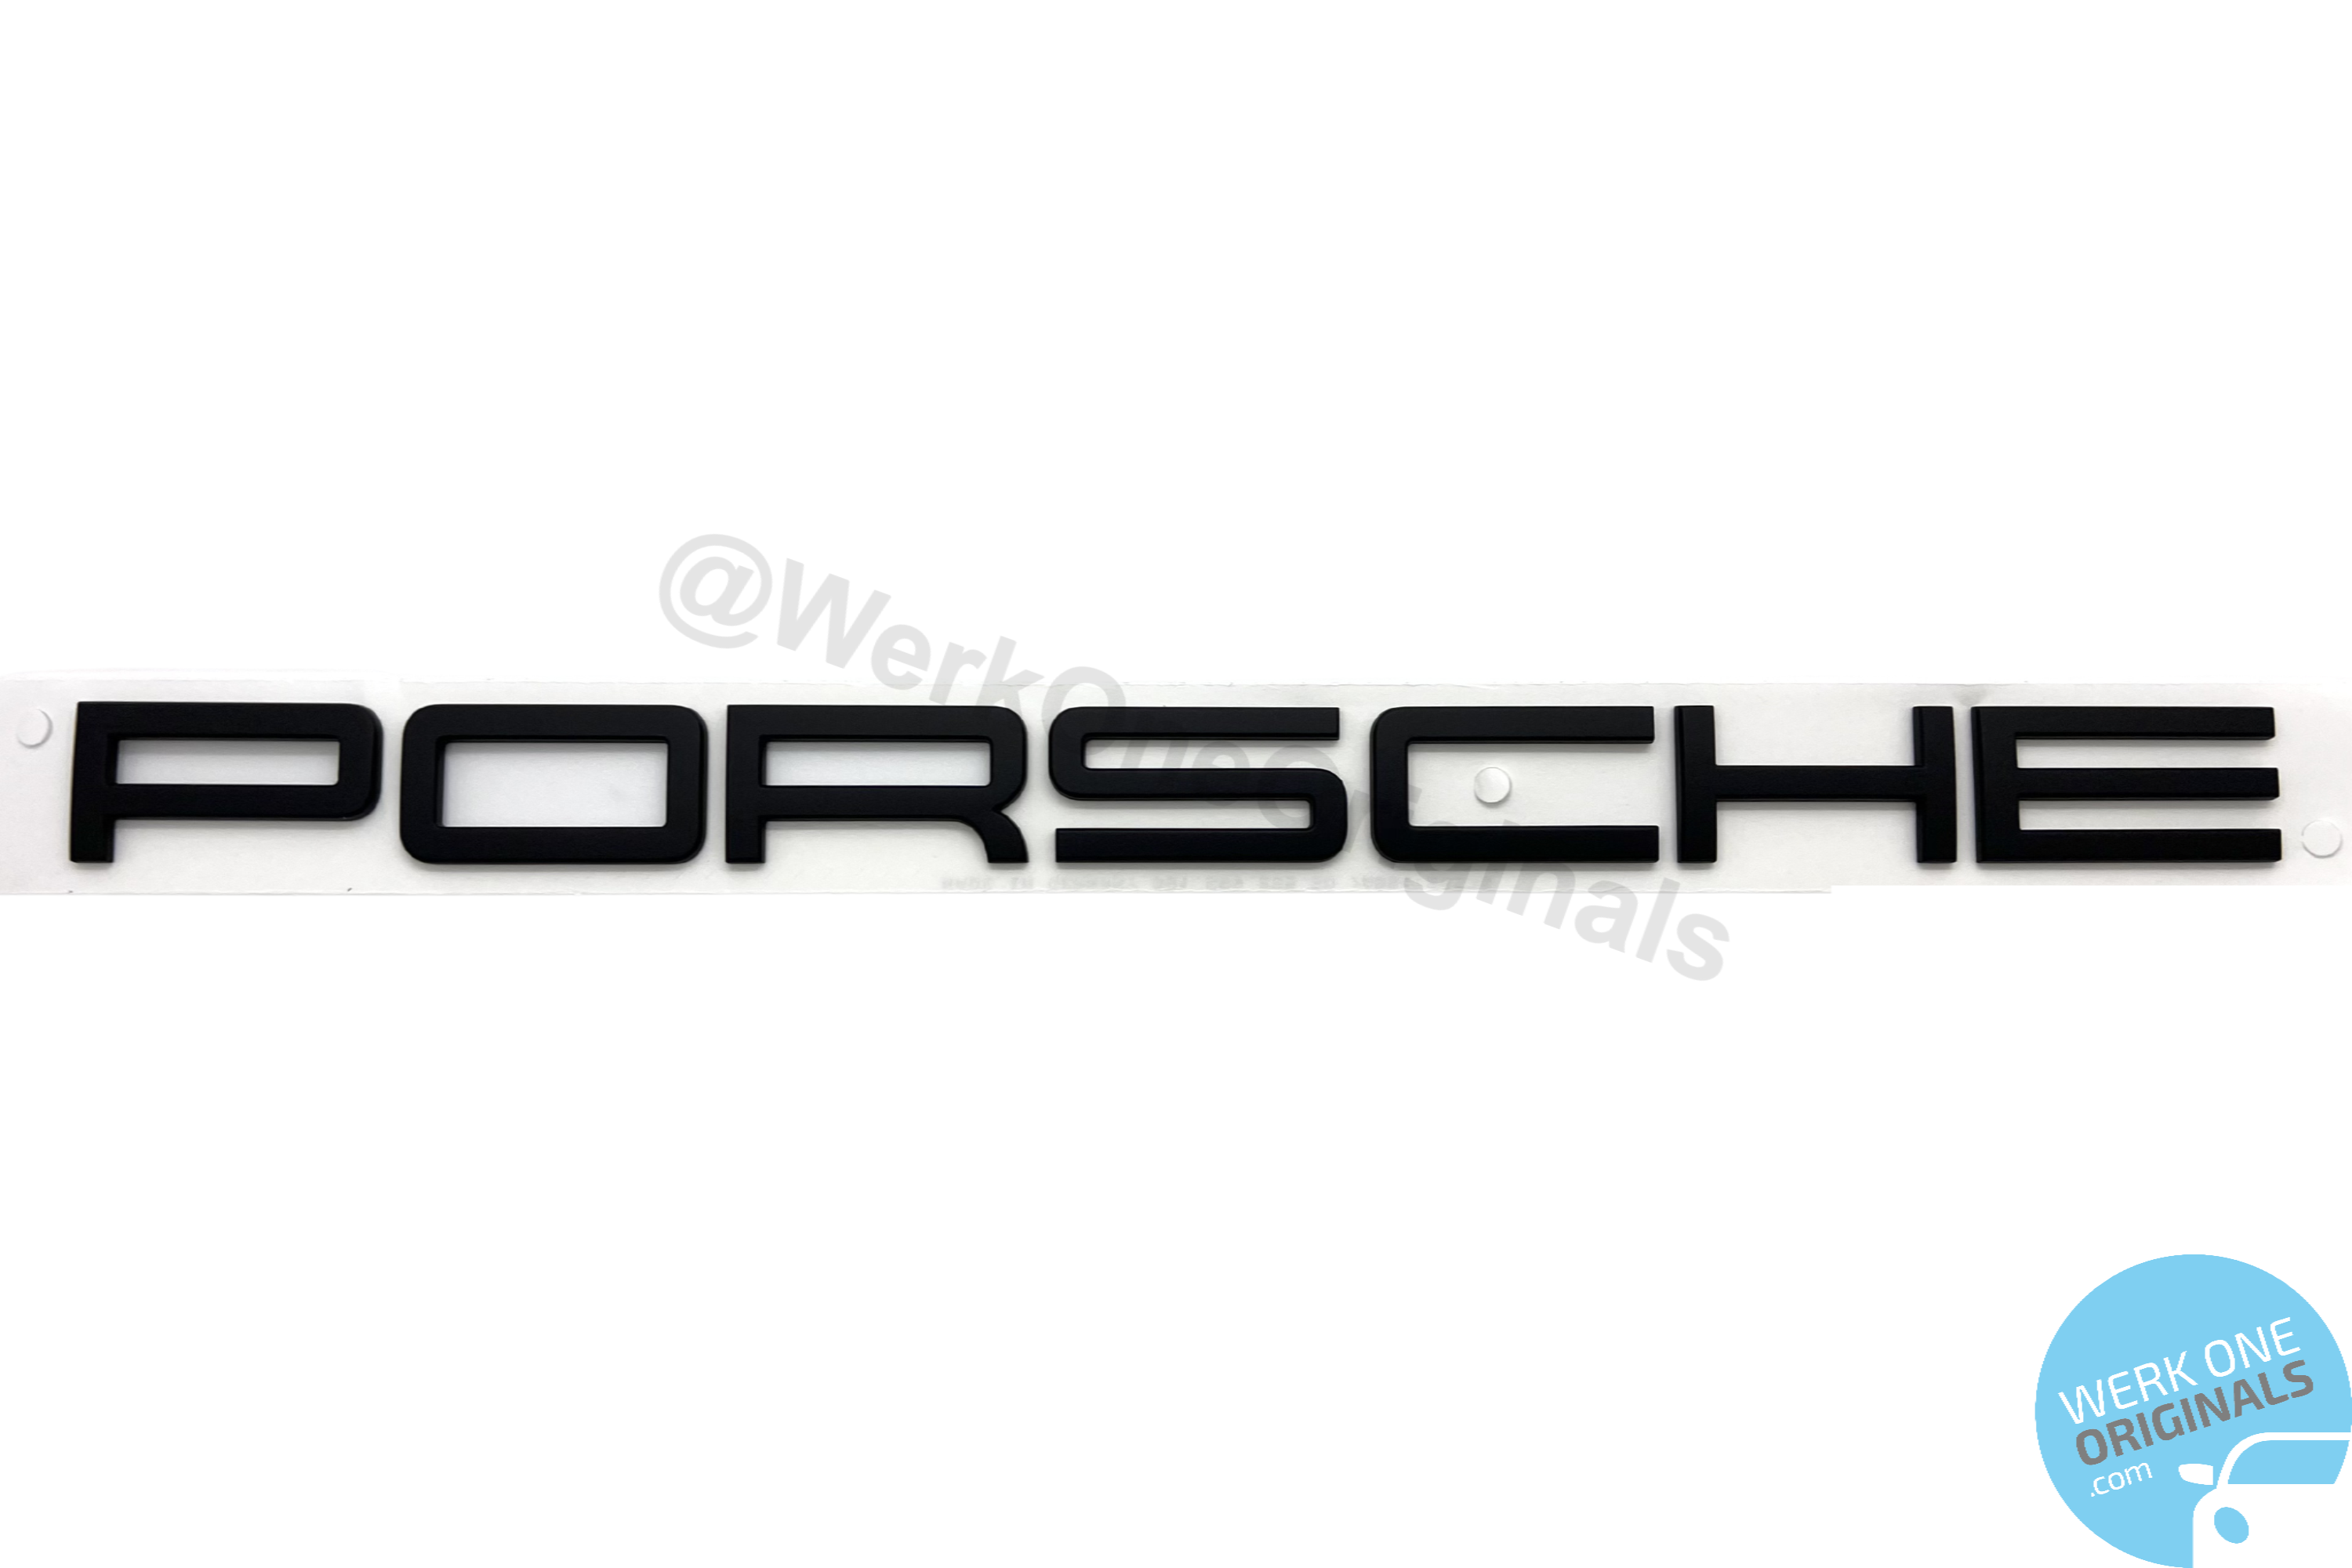 Official 'Porsche 911 Carrera' Rear Badge Decal in Matte Black for 911 Type 991 Carrera Models